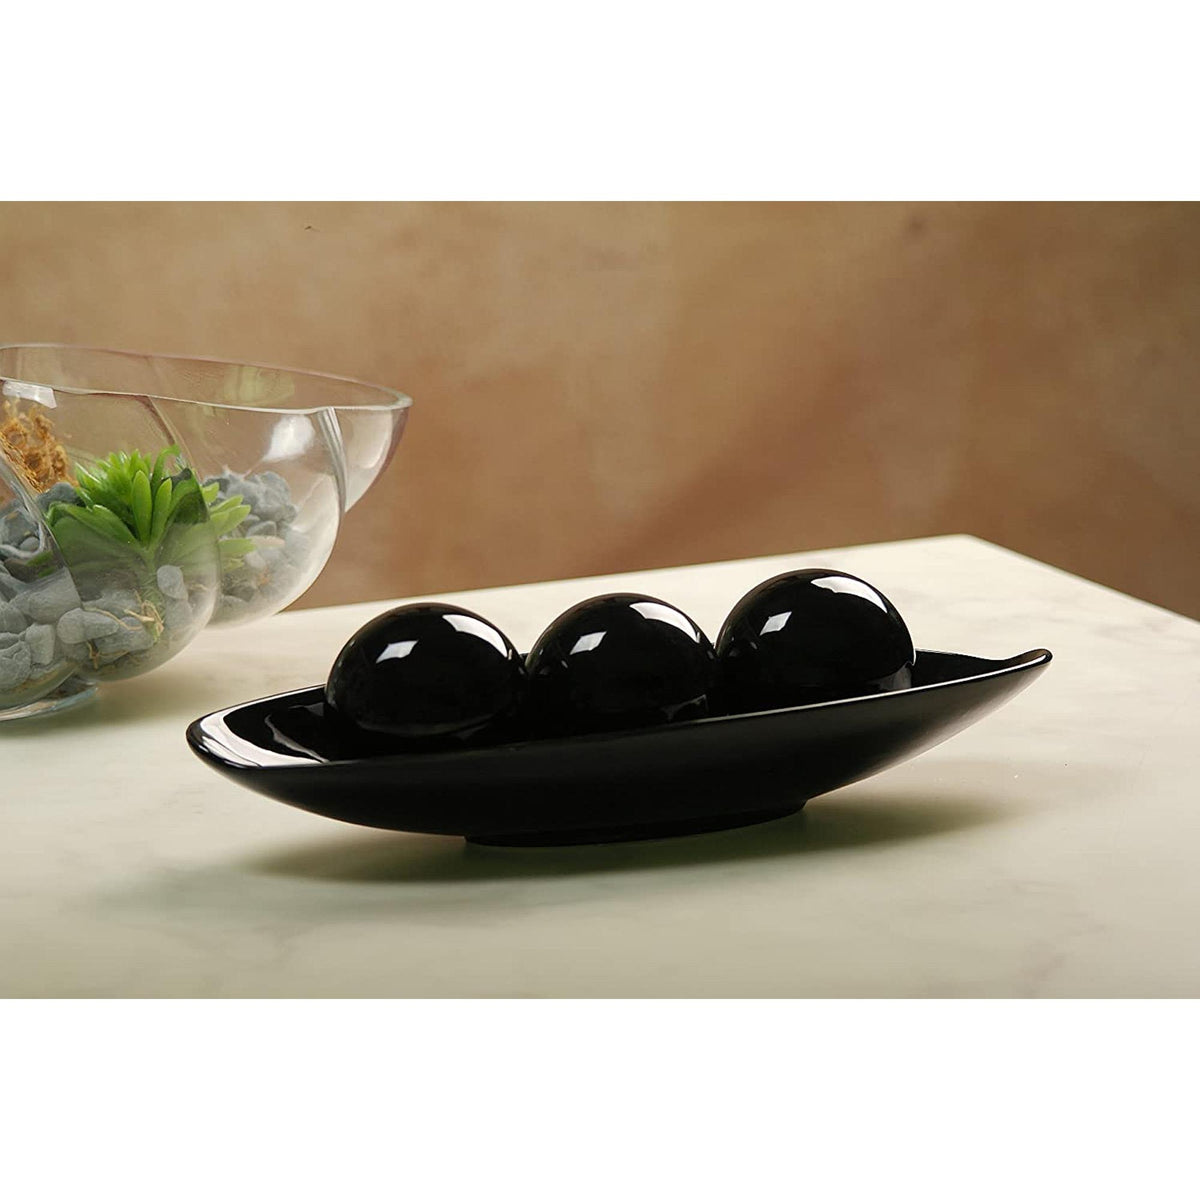 HOSLEY® Ceramic Decorative Bow and Orb set,  Black Glazed